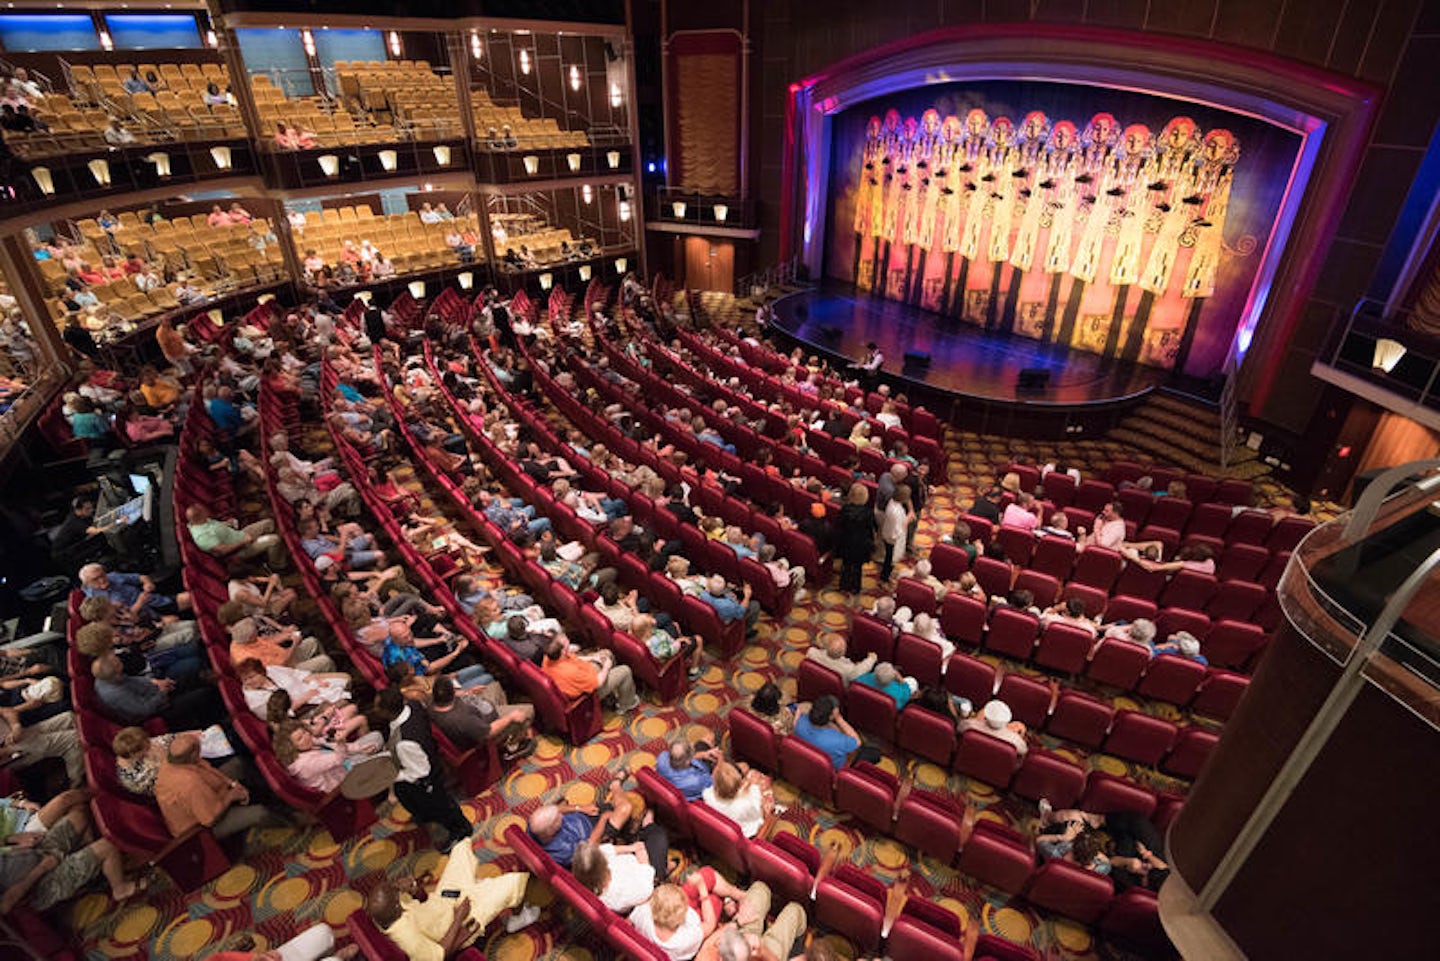 Arcadia Theater on Freedom of the Seas (Photo: Cruise Critic)